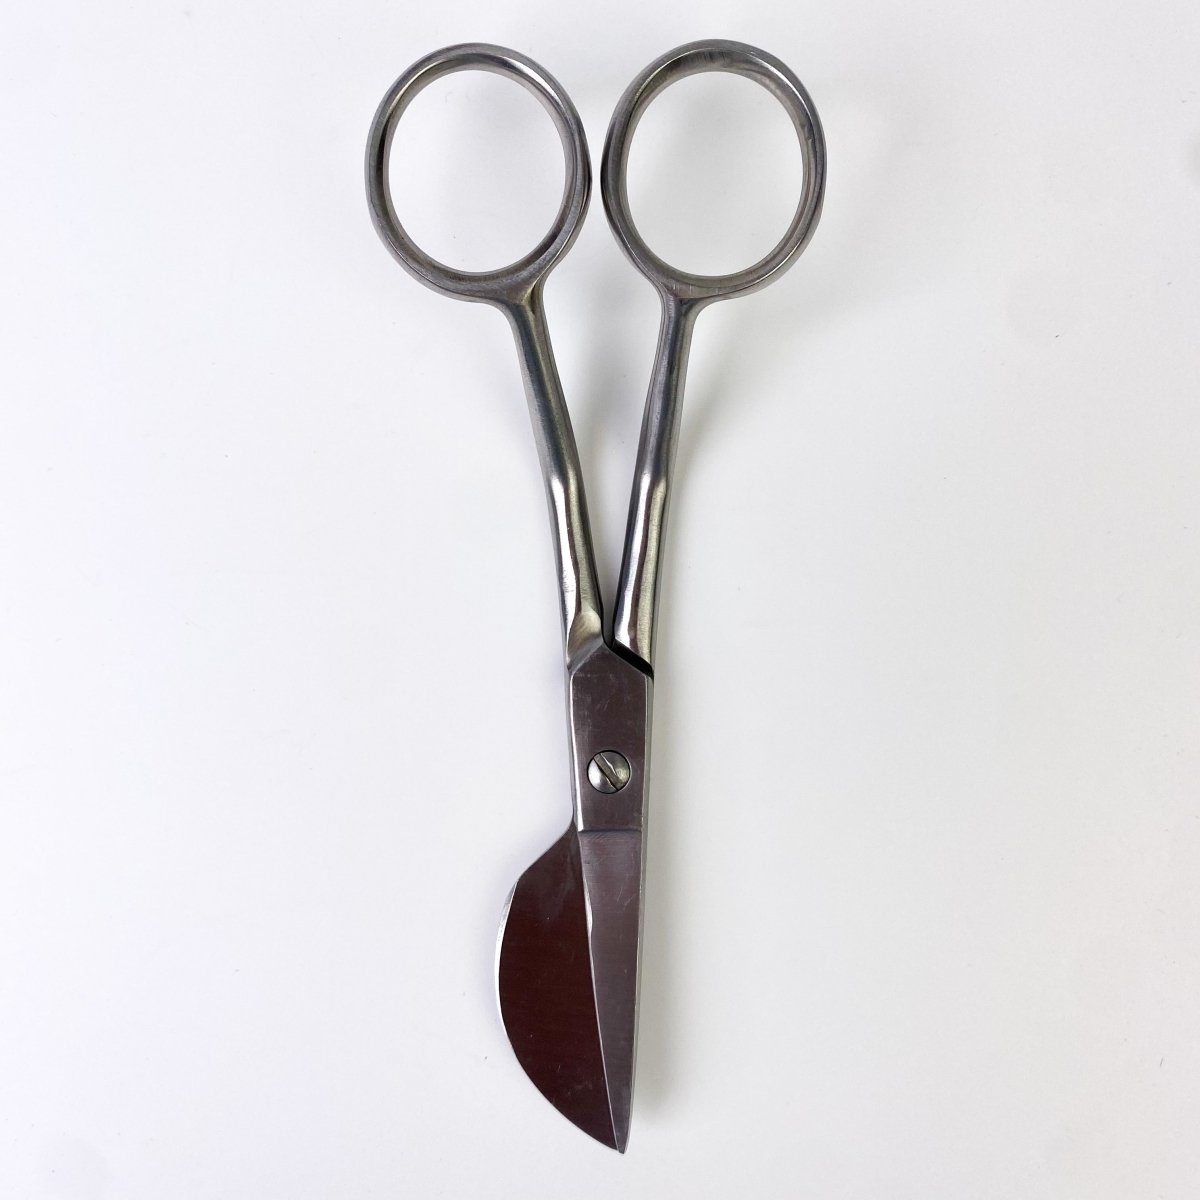 Klasse - Stainless Steel - Applique Scissors Duckbill – Sewing Gem